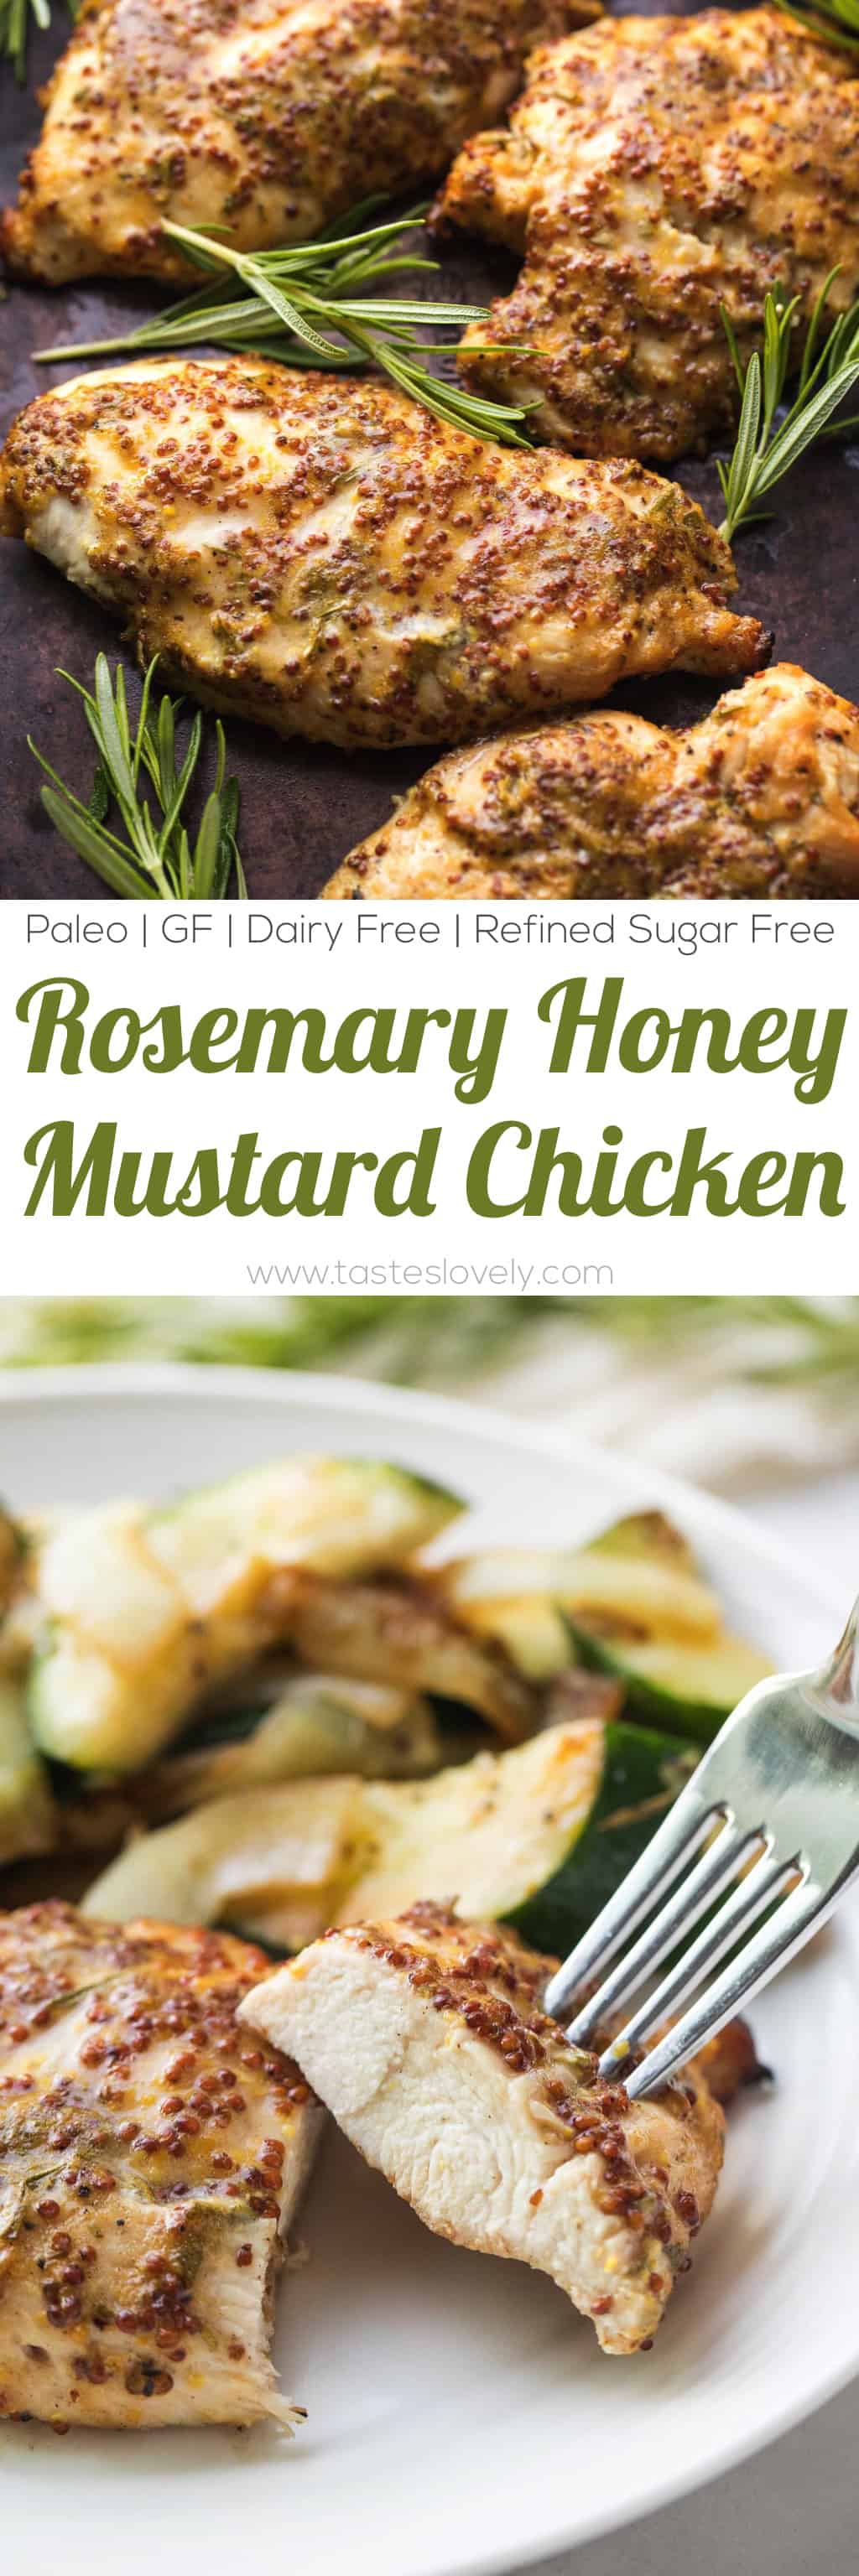 Paleo Rosemary Honey Mustard Chicken Recipe - chicken marinated in a rosemary honey mustard sauce and baked in the oven. Ready in 30 minutes! #paleo #glutenfree #grainfree #dairyfree #sugarfree #refinedsugarfree #cleaneating #realfood